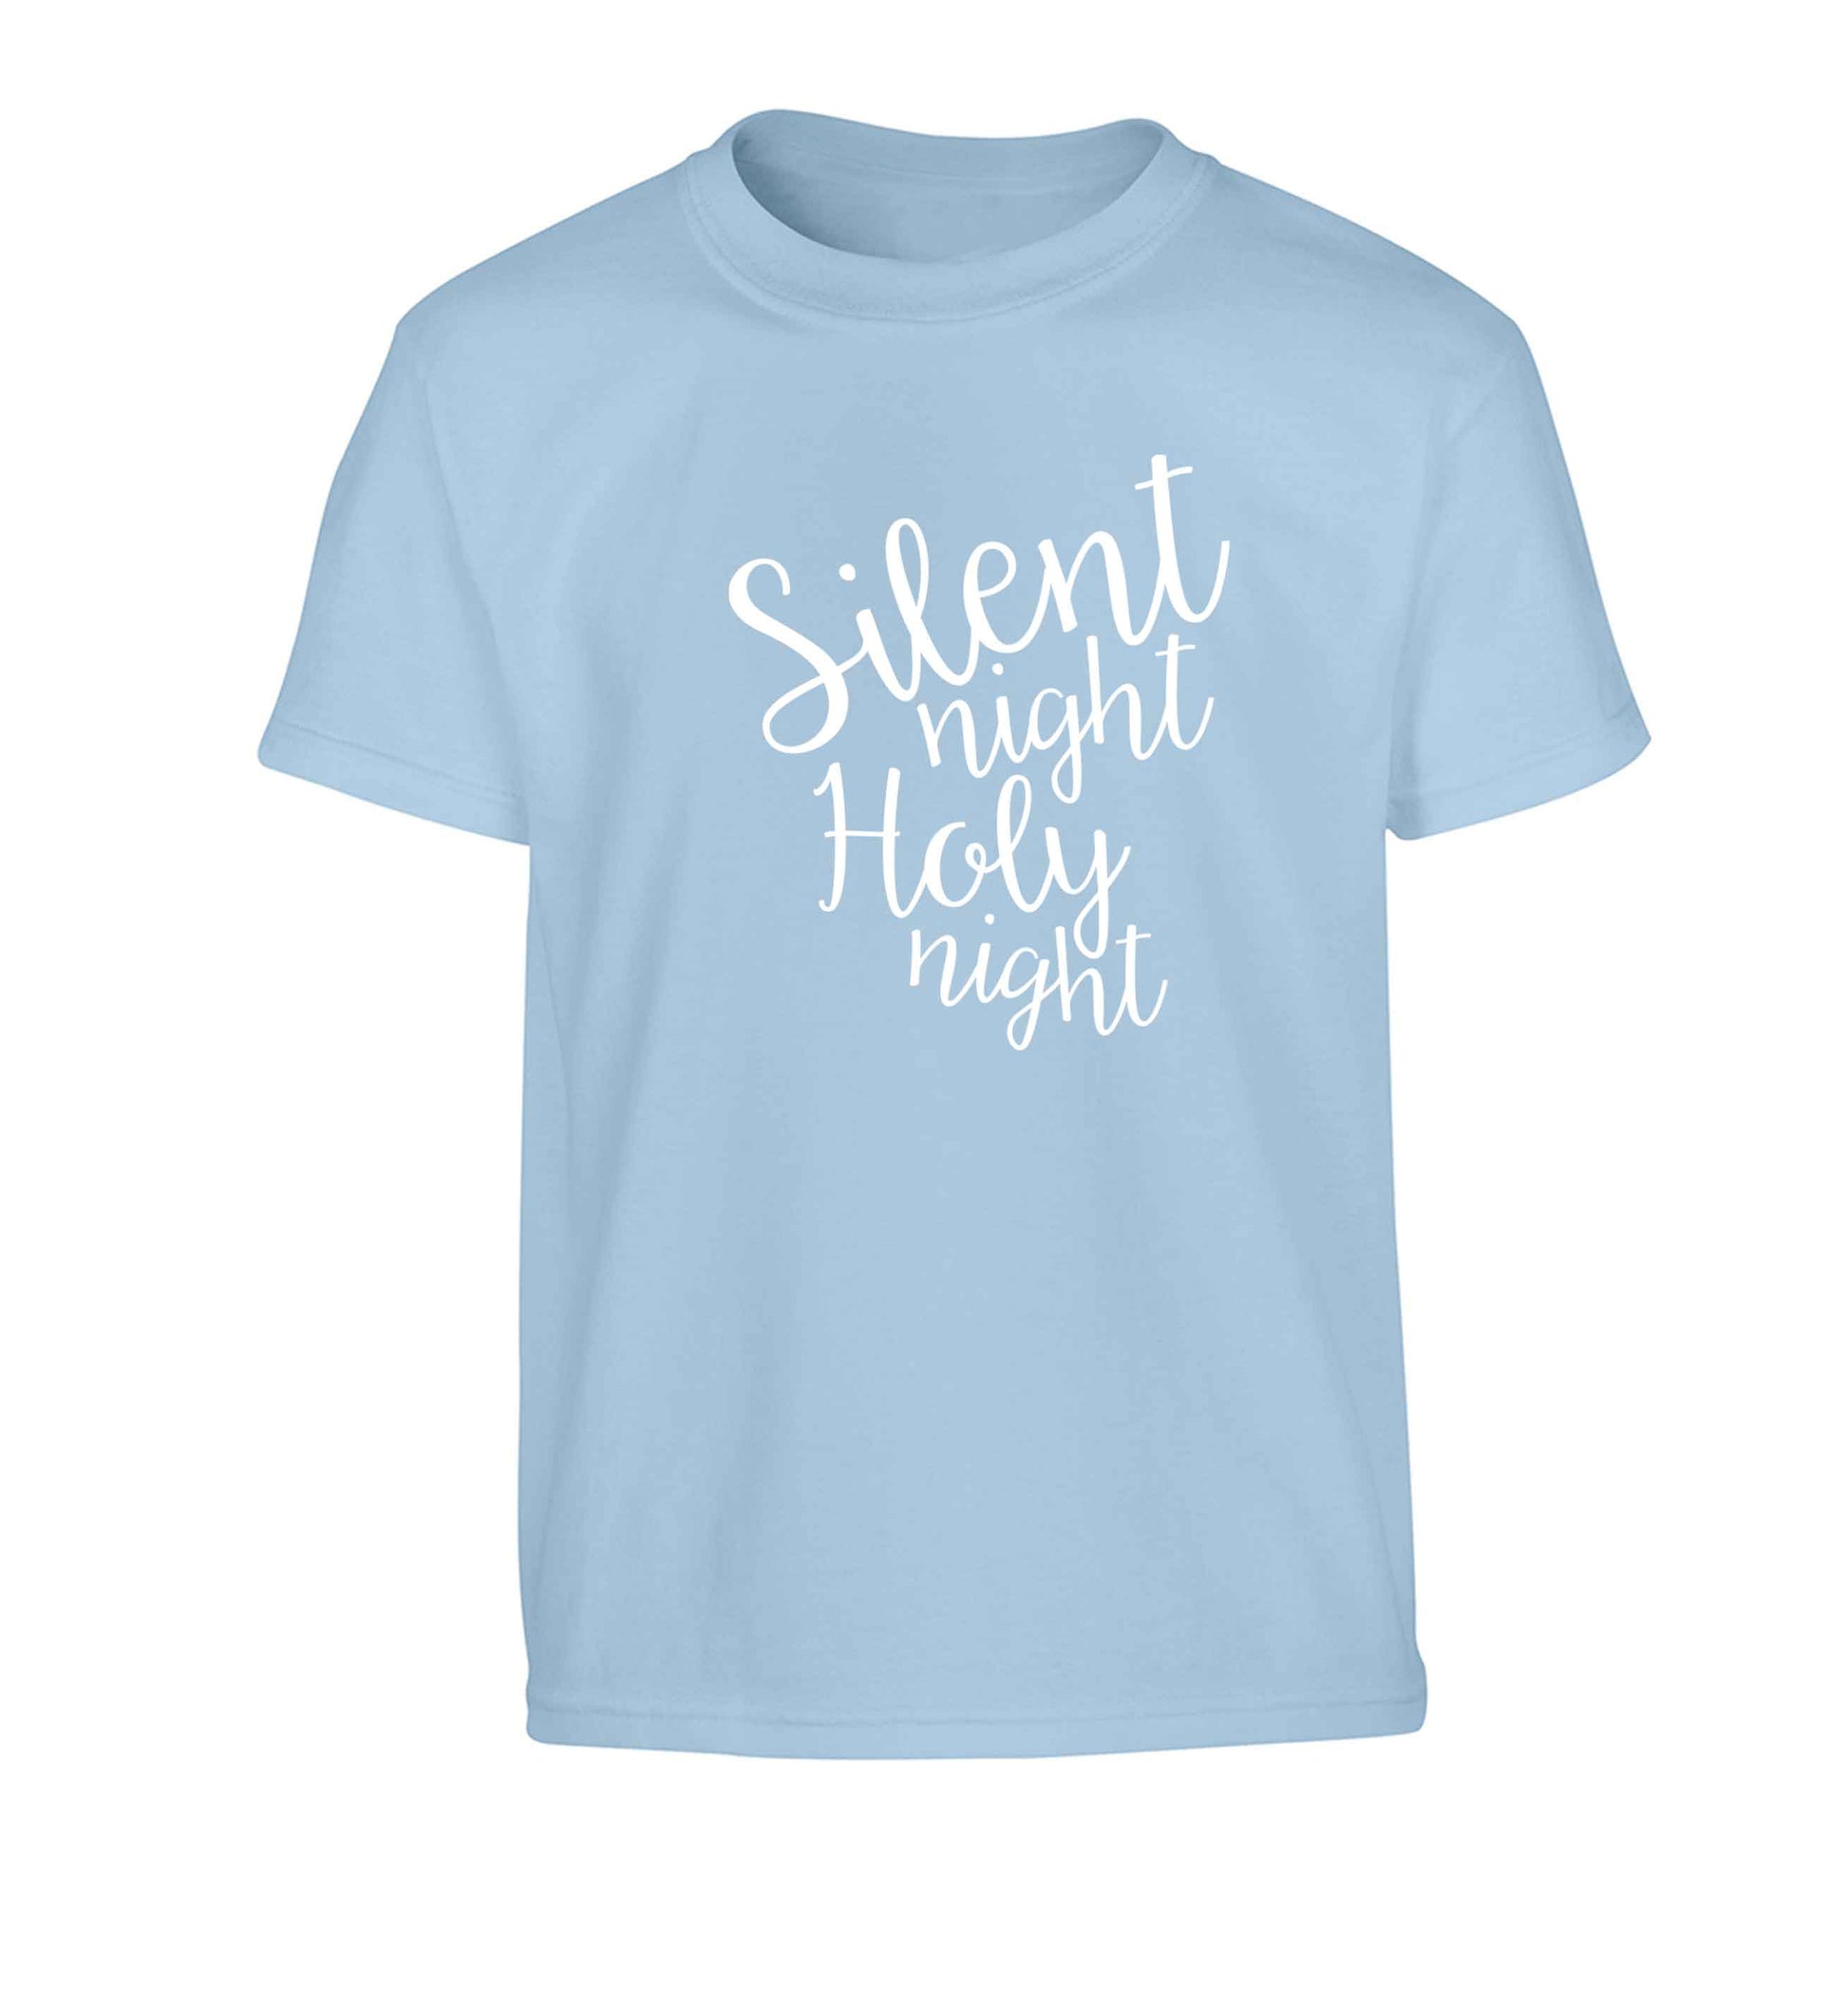 Silent night holy night Children's light blue Tshirt 12-13 Years